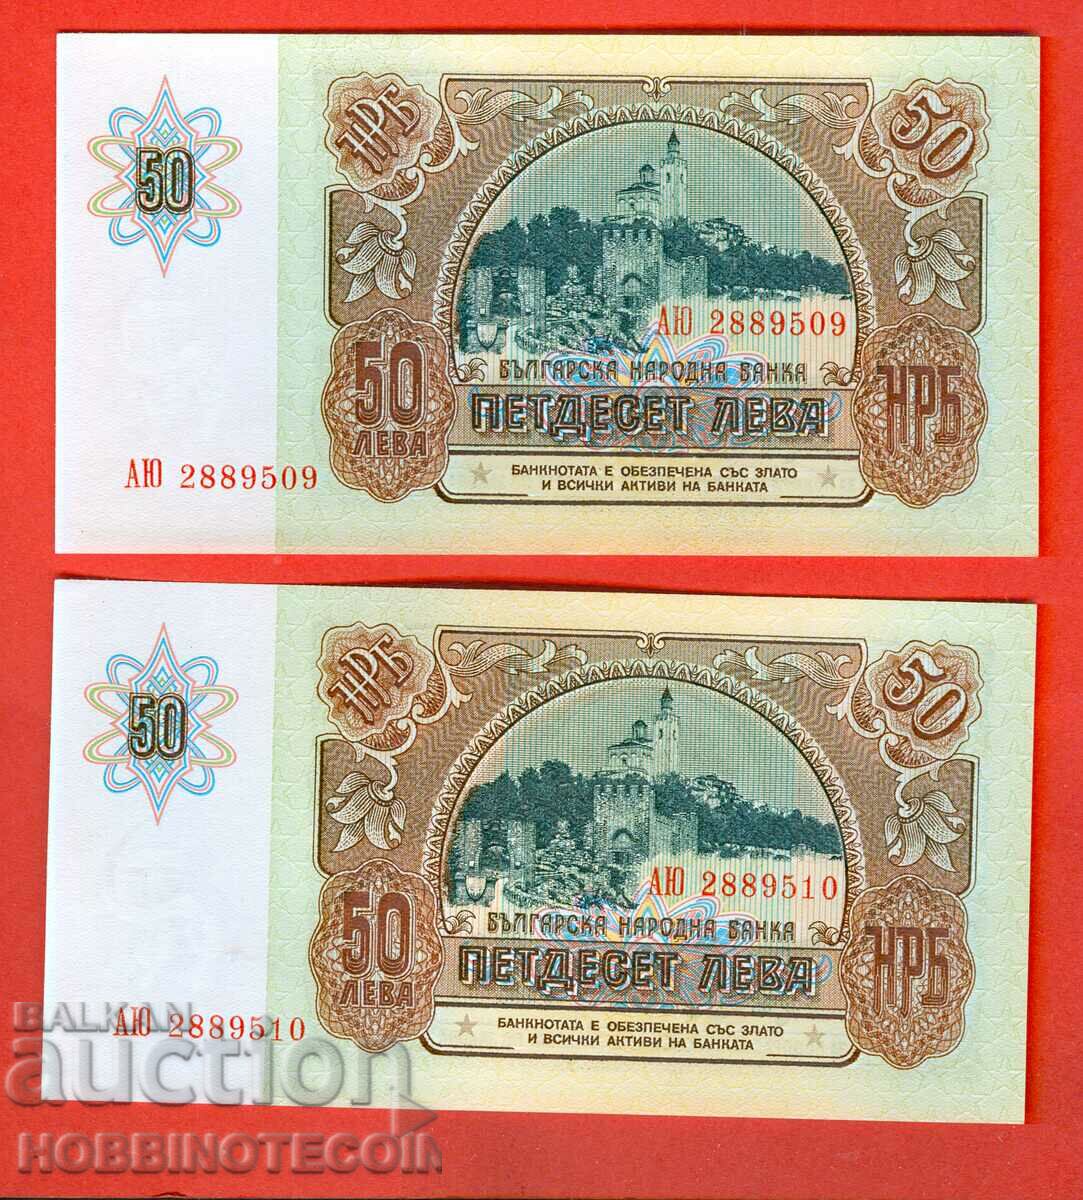 BULGARIA BULGARIA 2 x 50 BGN CONSECUTIVE COINS issue 1990 NEW UNC